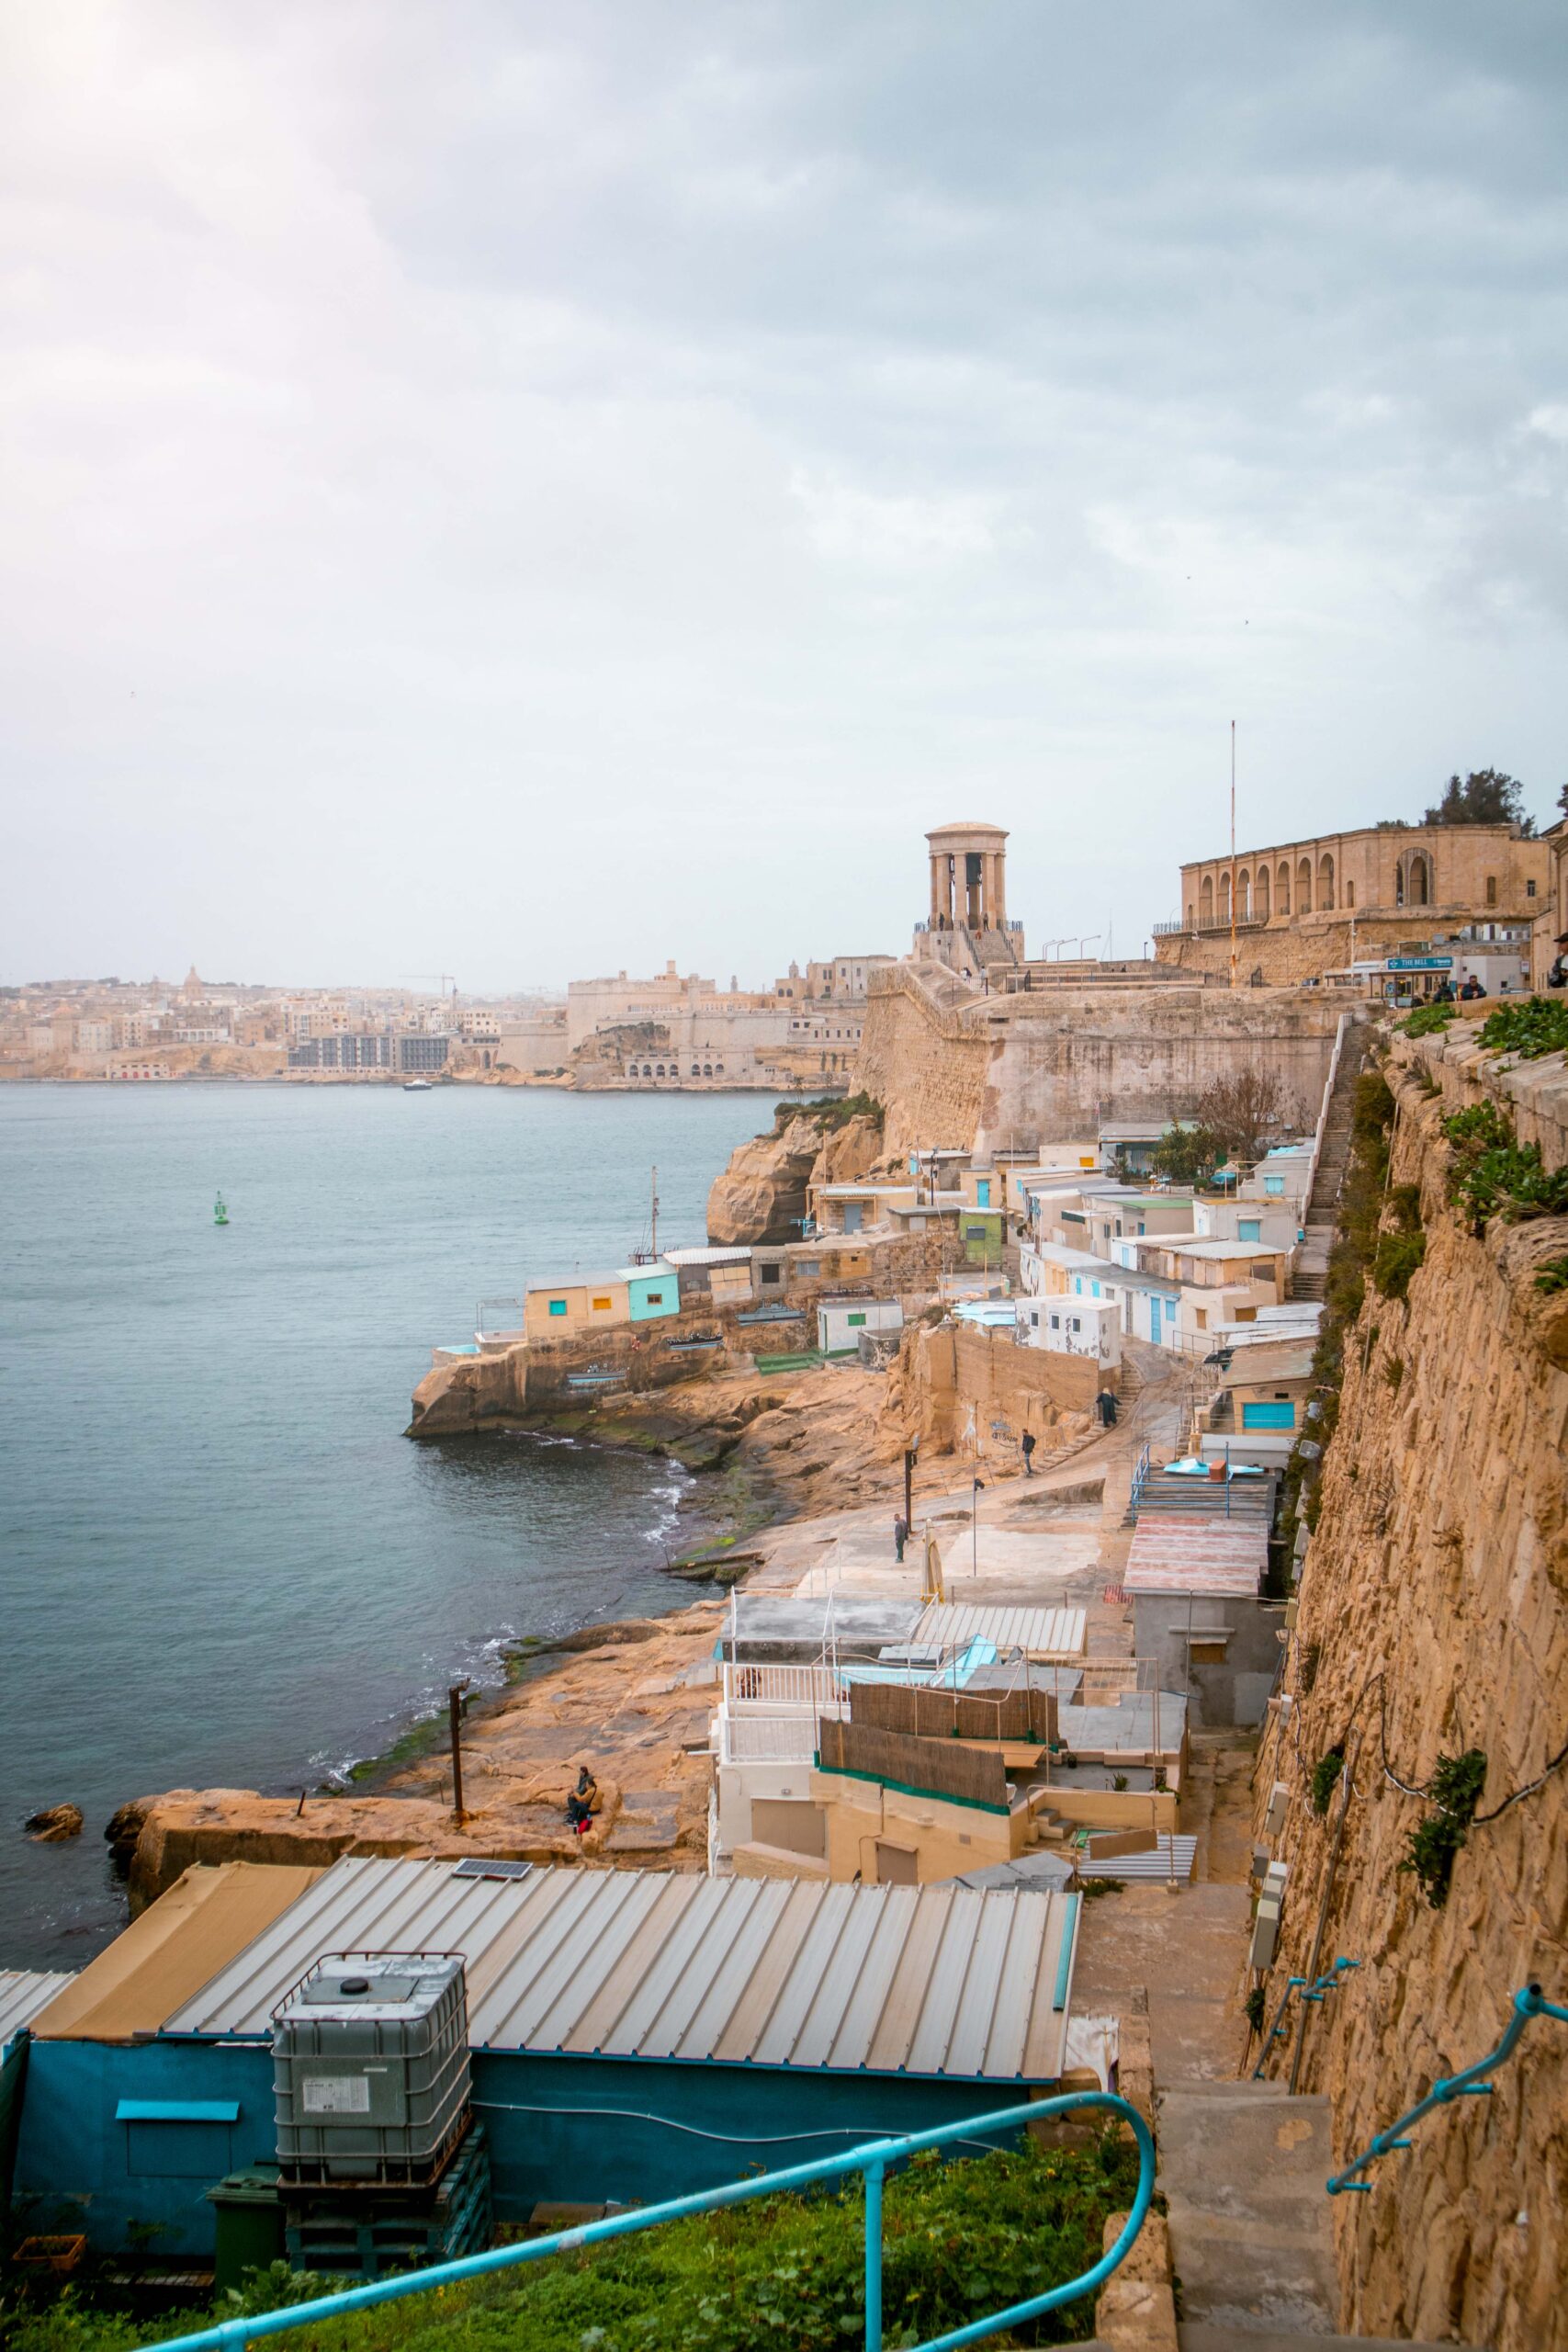 Panoramic view of Wuestenwinds beach and Siege Bell War Memorial in Valletta, Malta